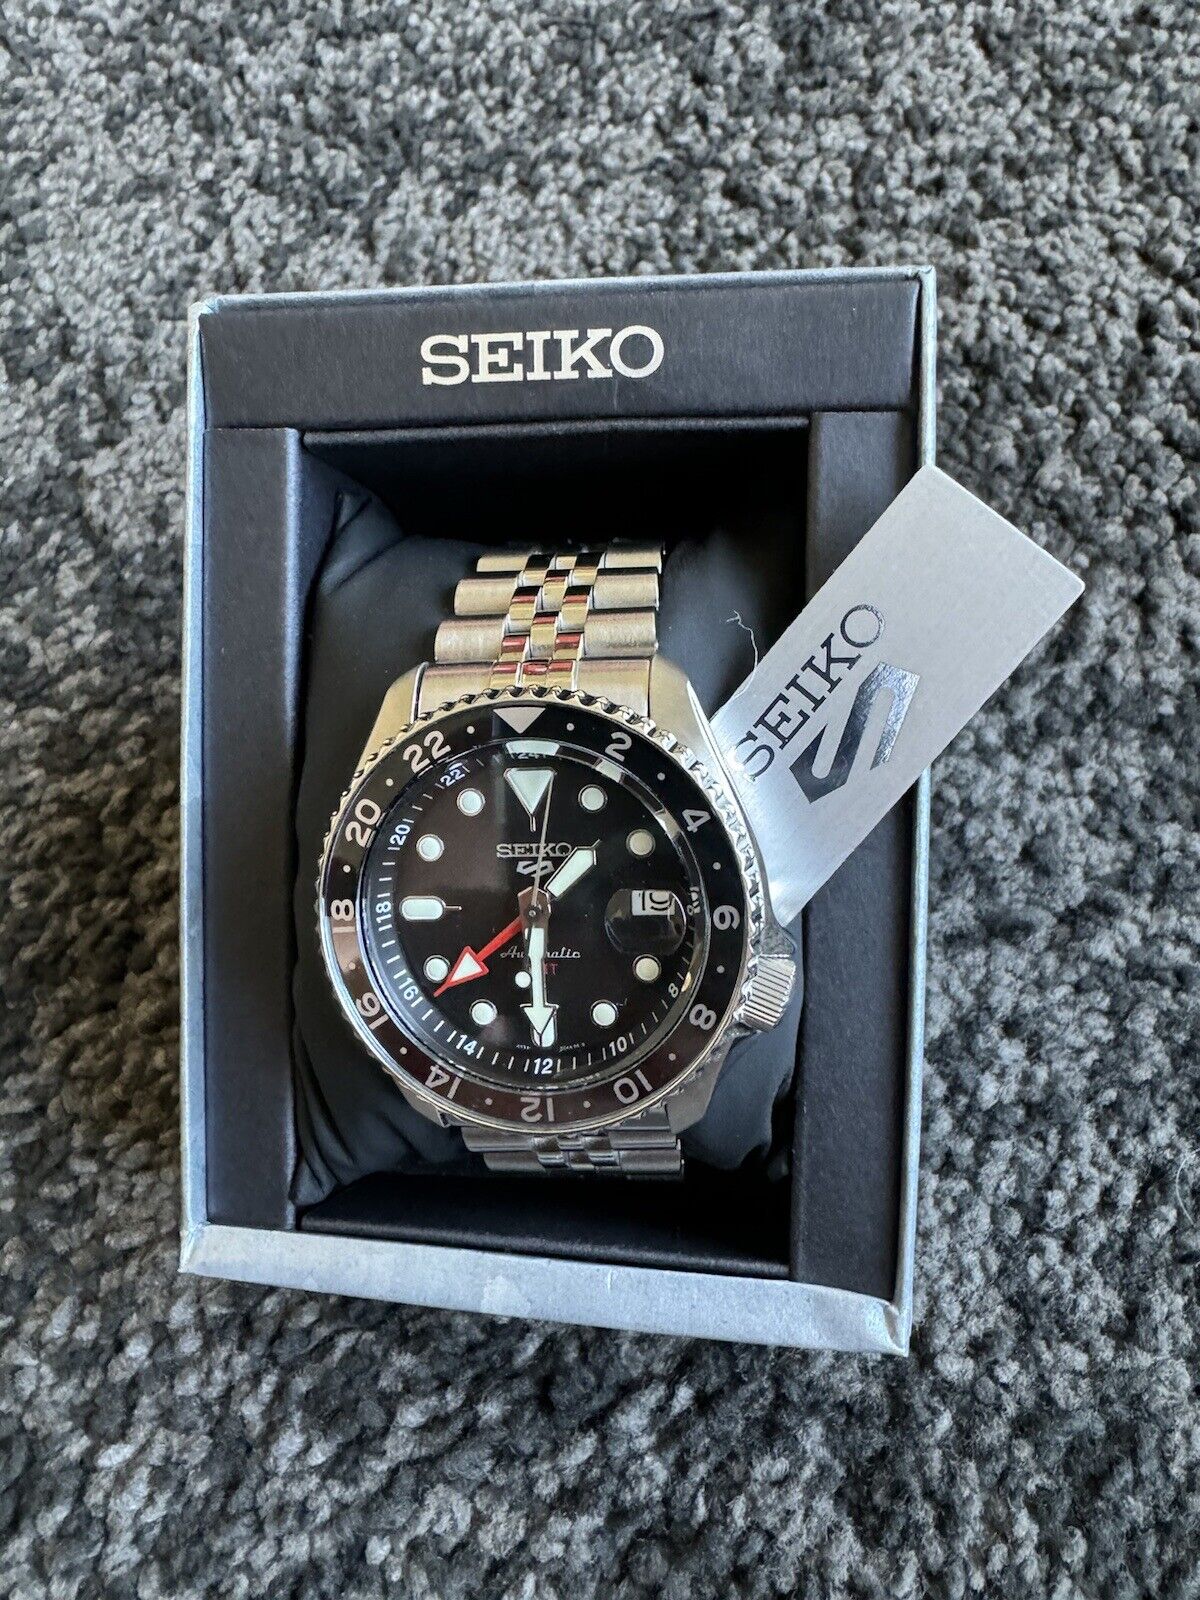 SSK001K1 5 Sports Seiko Men's Black Watch - - vintagewatches.pk